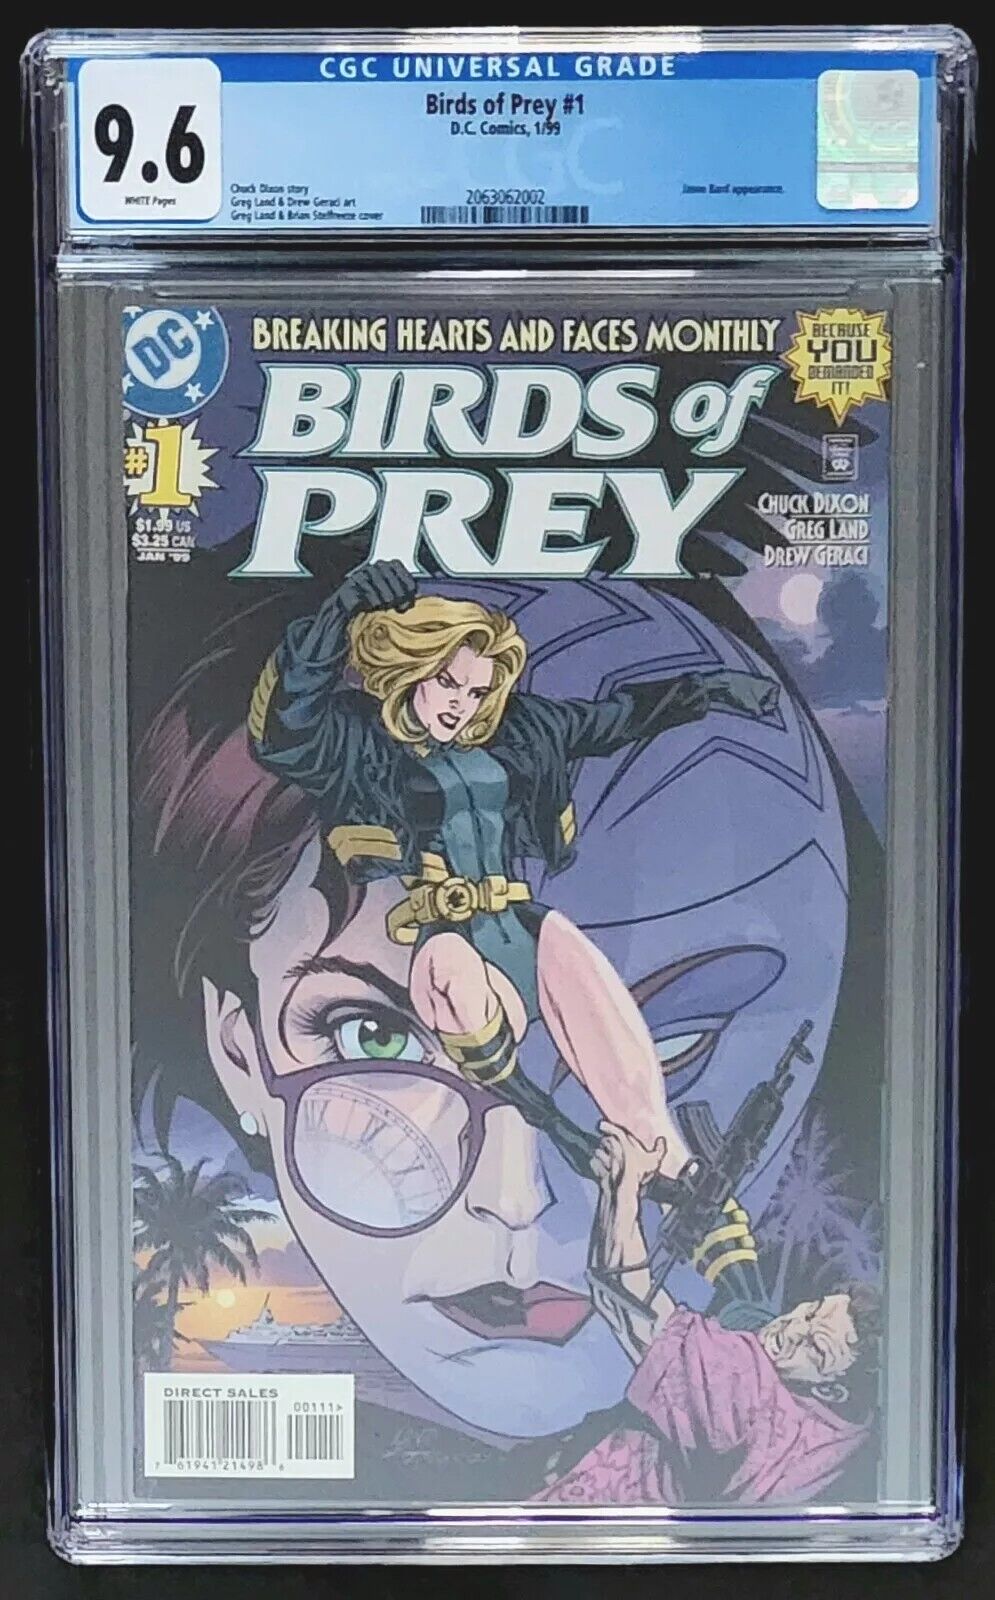 Birds of Prey #1 (1999) CGC 9.6 - WP - Chuck Dixon Story, Early Greg Land Art